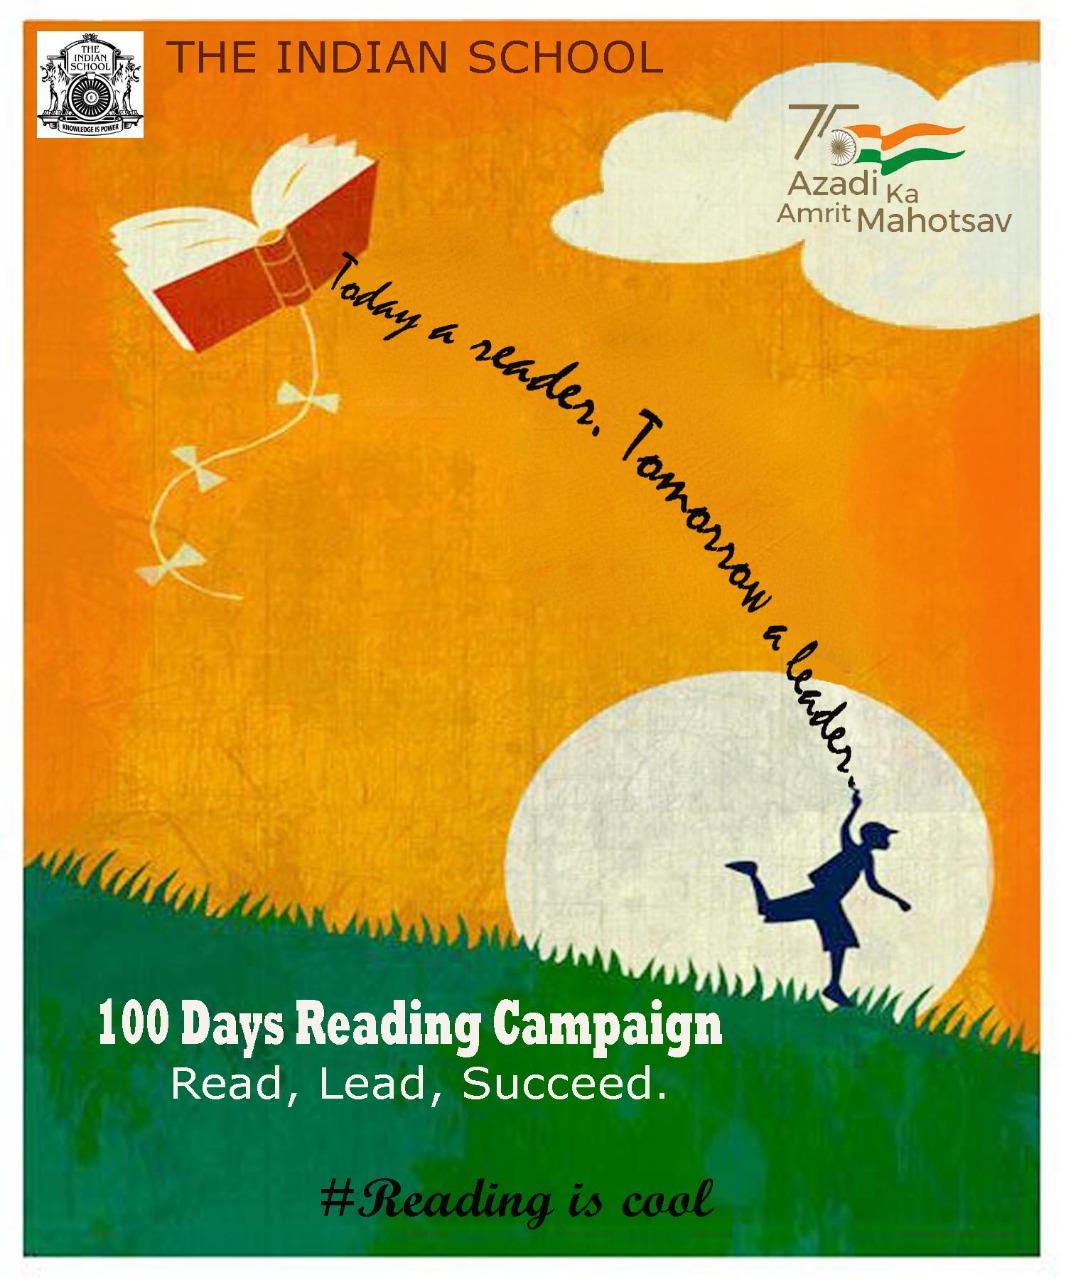 CBSE webinar on 100 Days Reading Campaign